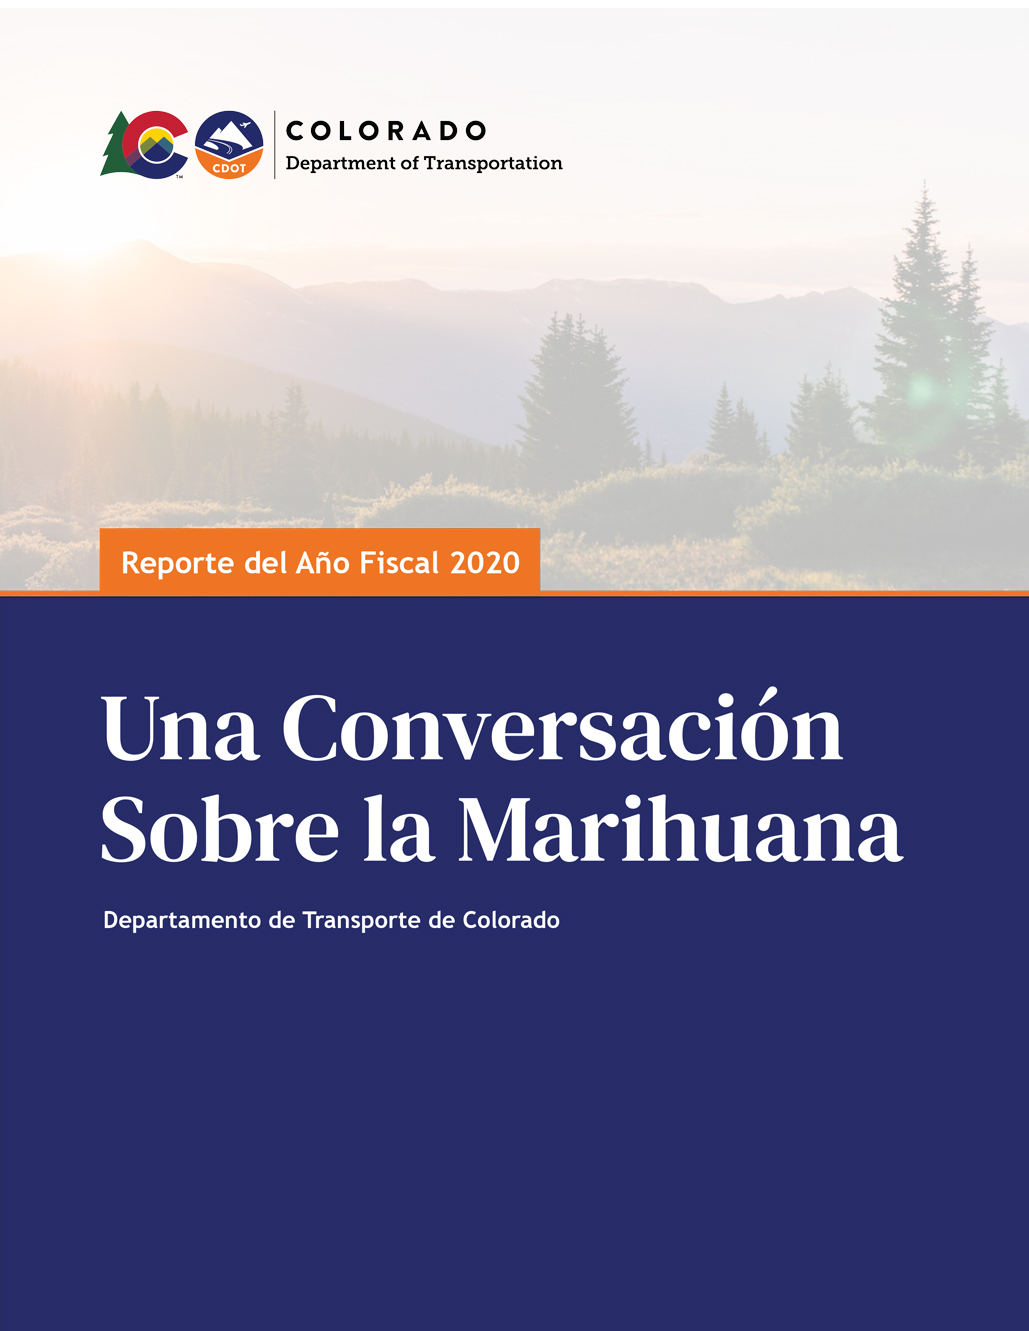 Spanish CC Report Cover.jpg detail image